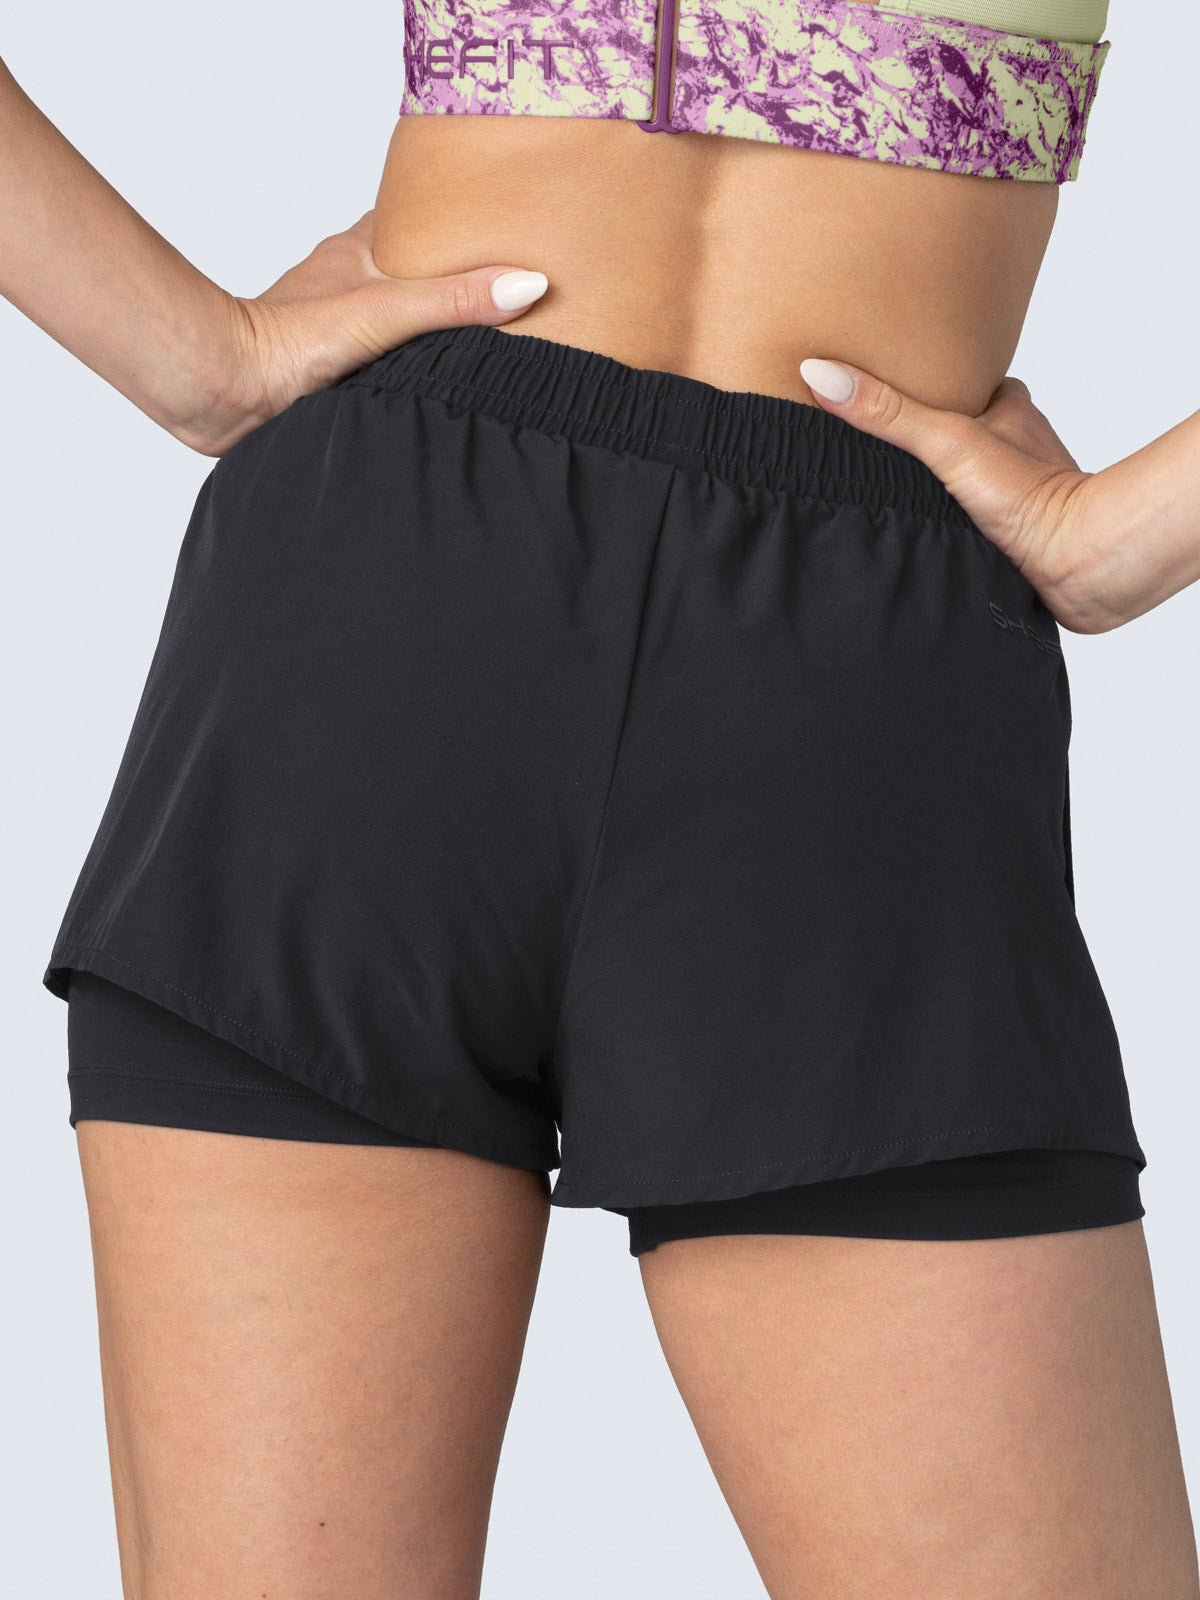 US, Glaze 2-in-1 Shorts - Black, Workout Shorts Women